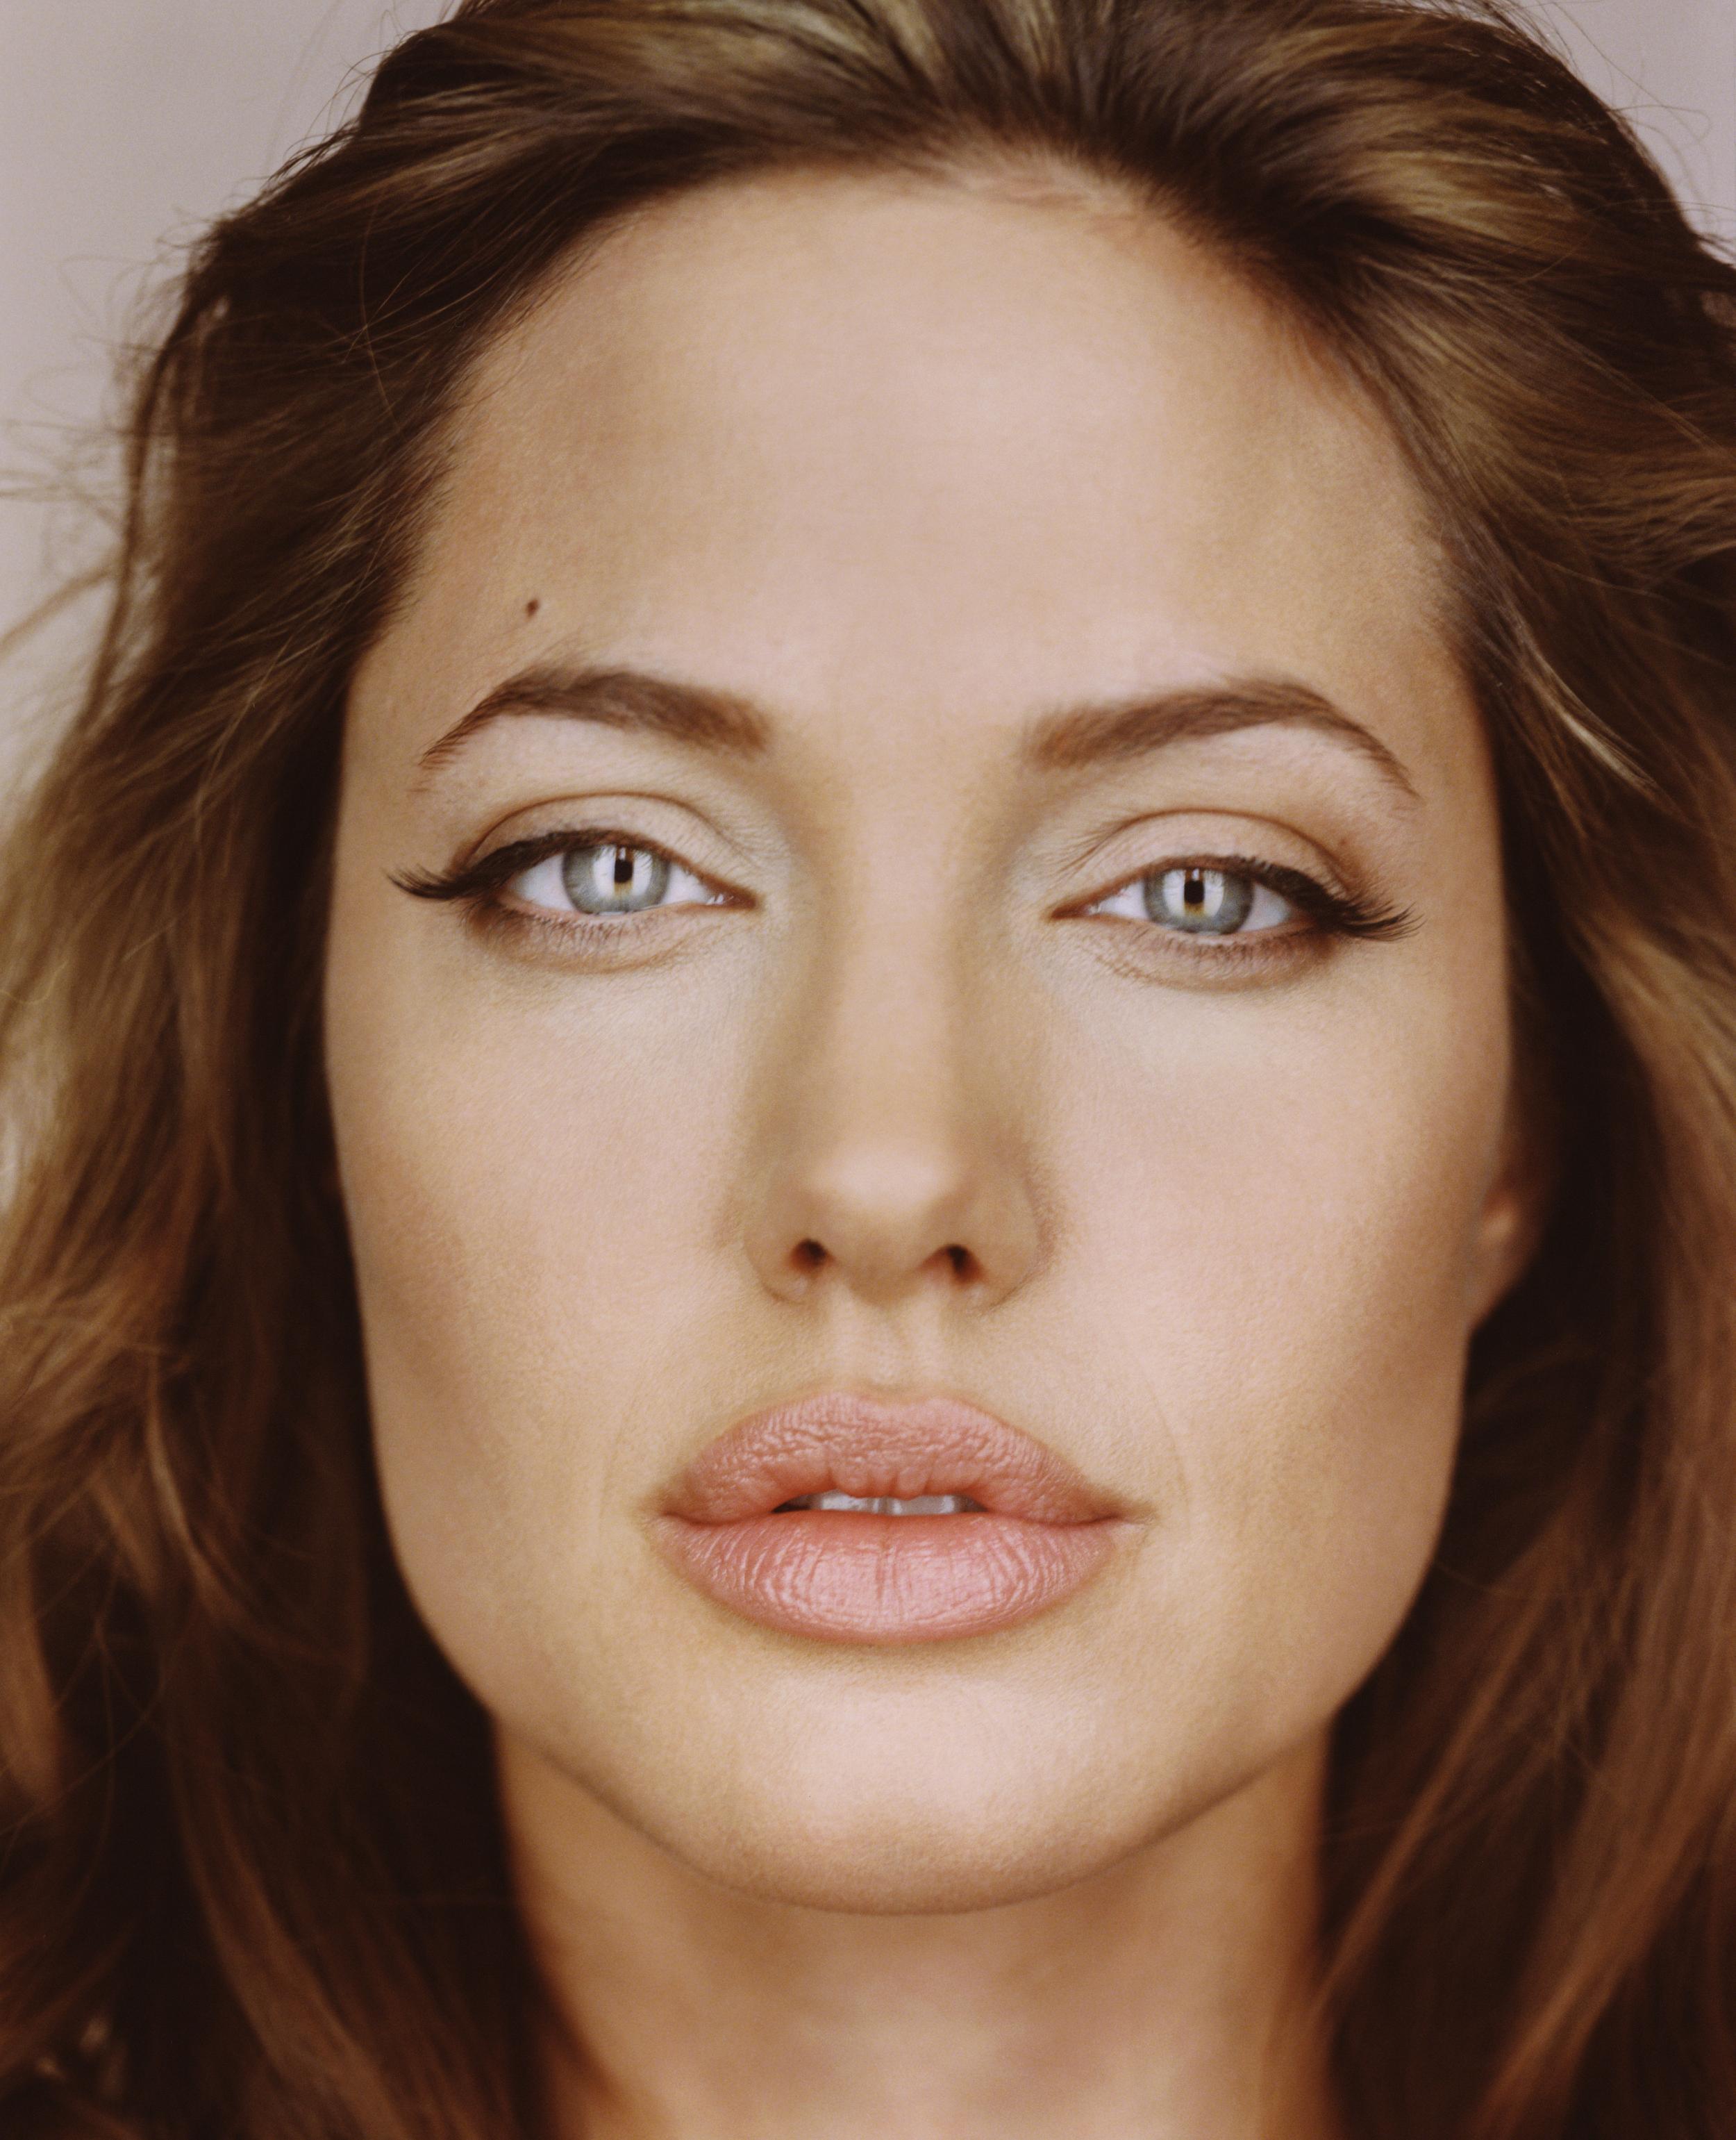 Angelina Jolie photo 160 of 3643 pics, wallpaper - photo #28678 - ThePlace22500 x 3081